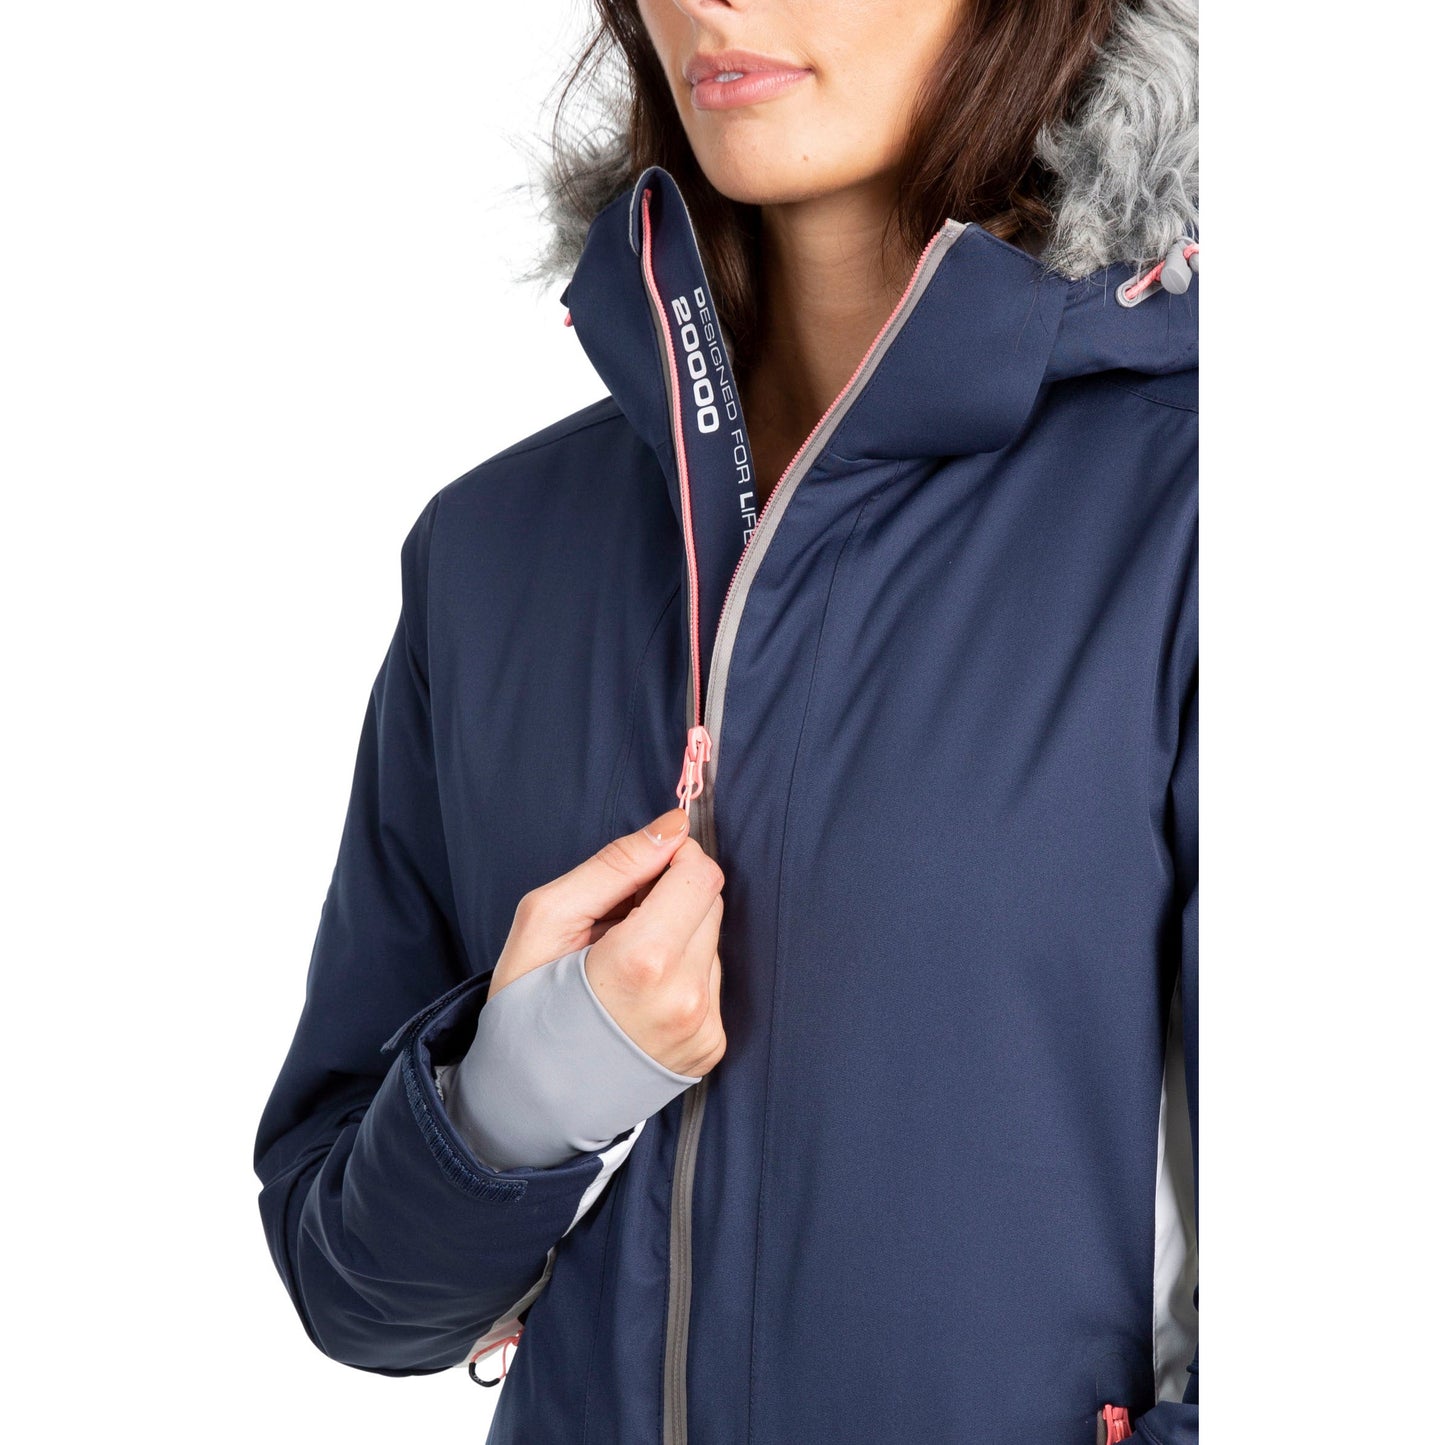 Trespass Womens DLX Luxury Padded Ski Jacket Sandrine in Navy